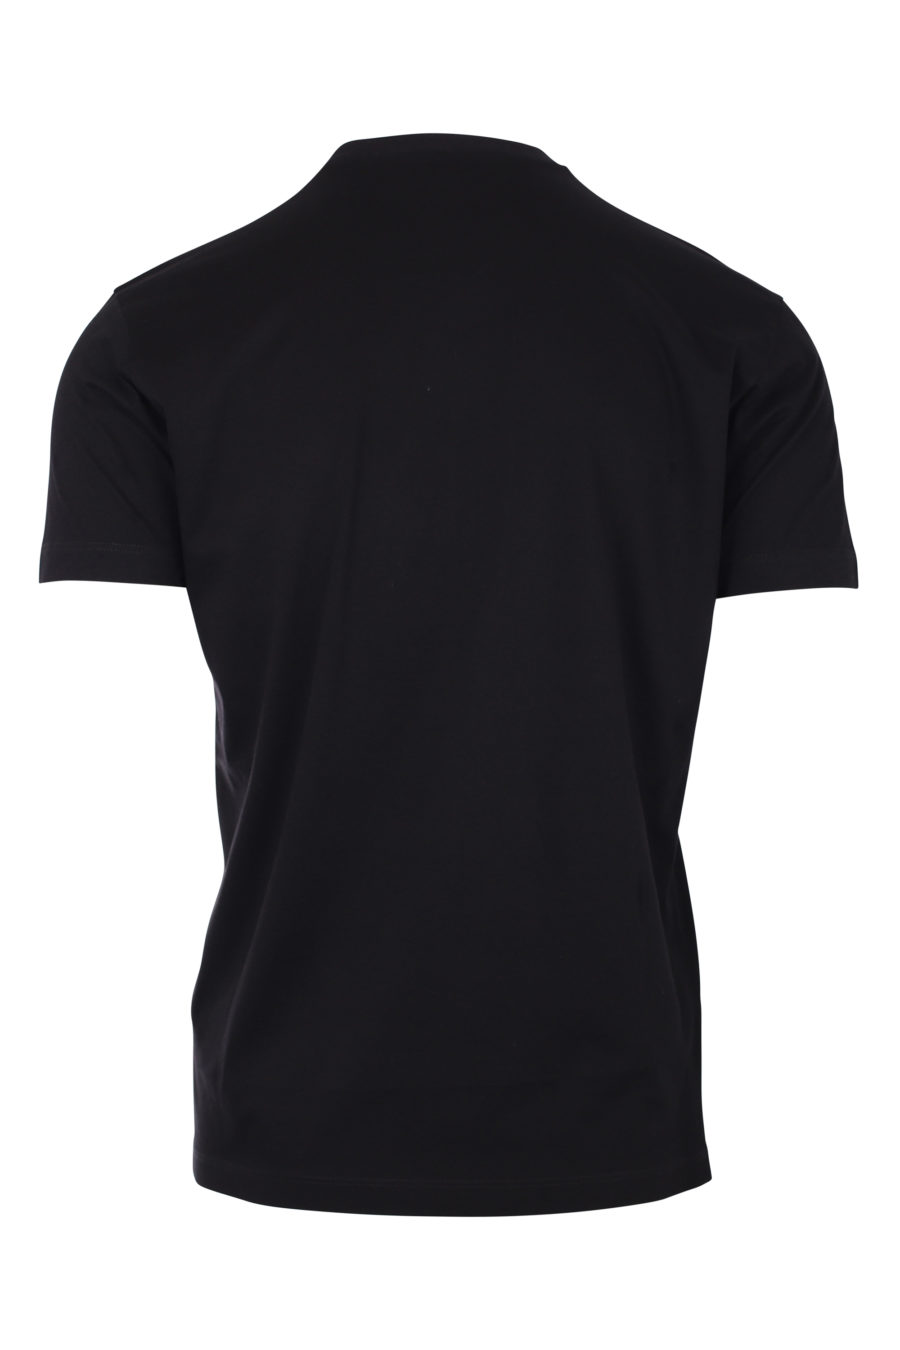 Camiseta negra con logo "painting" blanco - IMG 9791